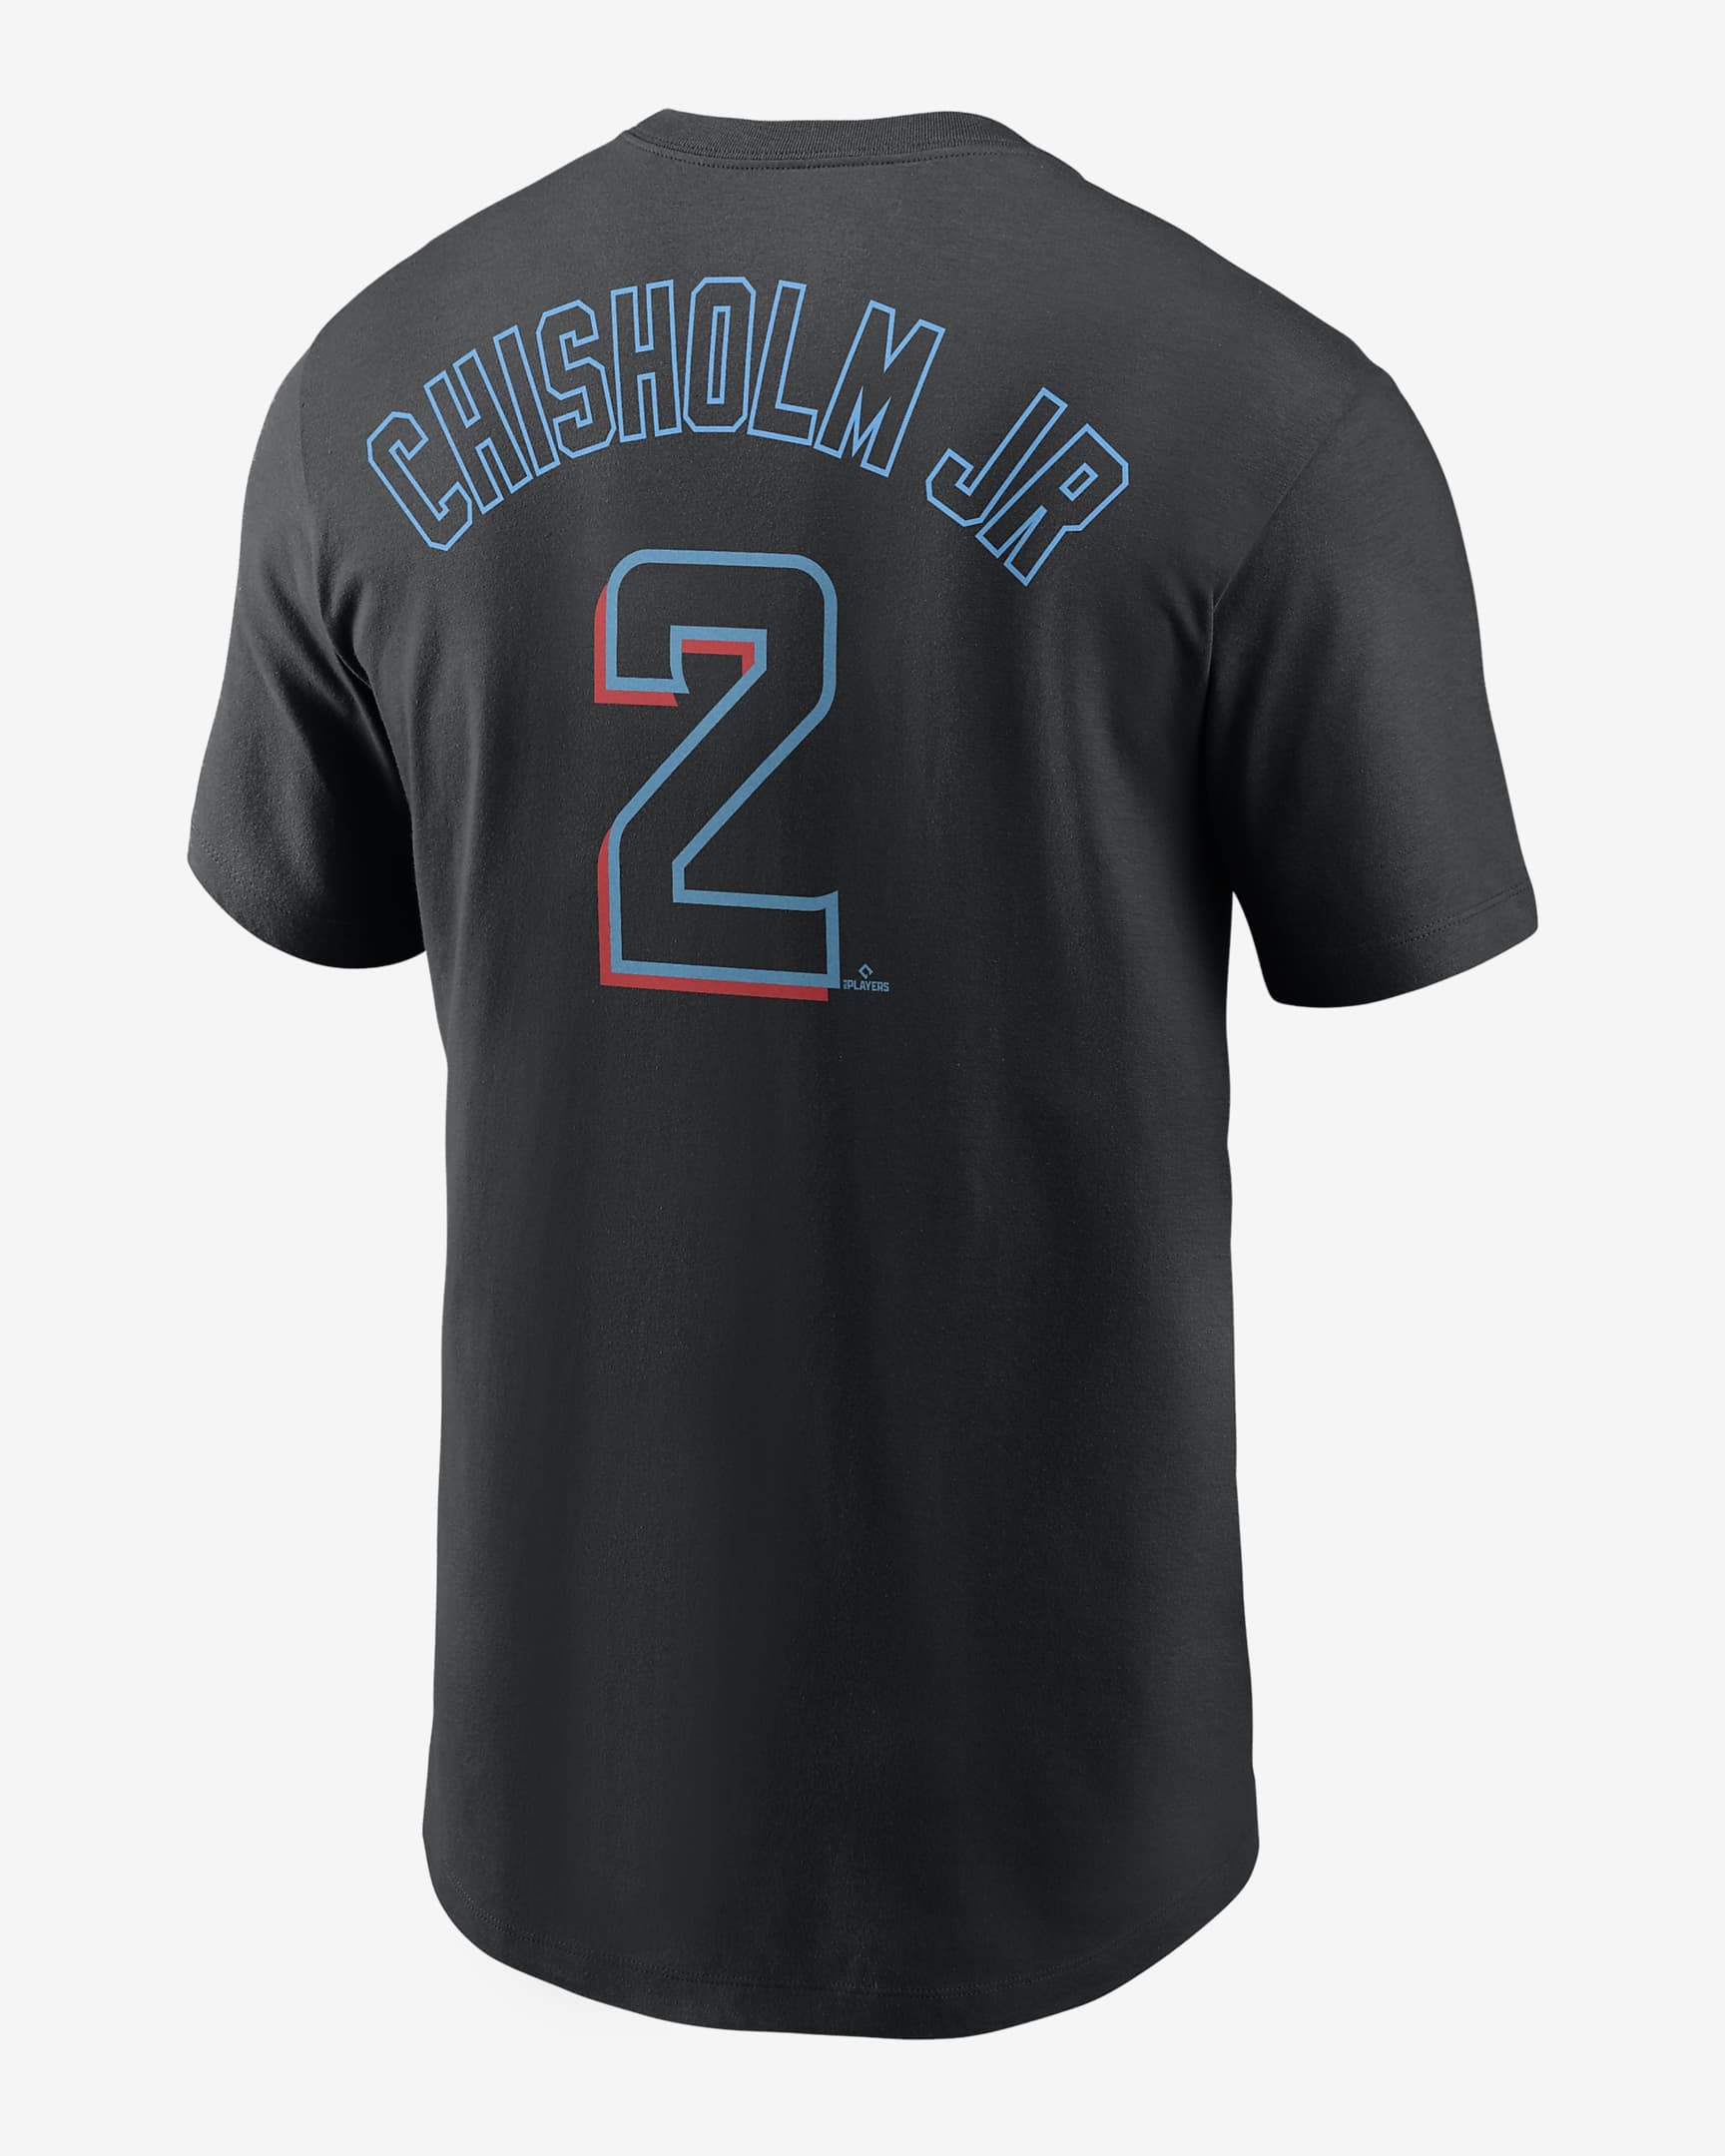 MLB Miami Marlins (Jazz Chisholm Jr.) Playera para hombre. Nike.com